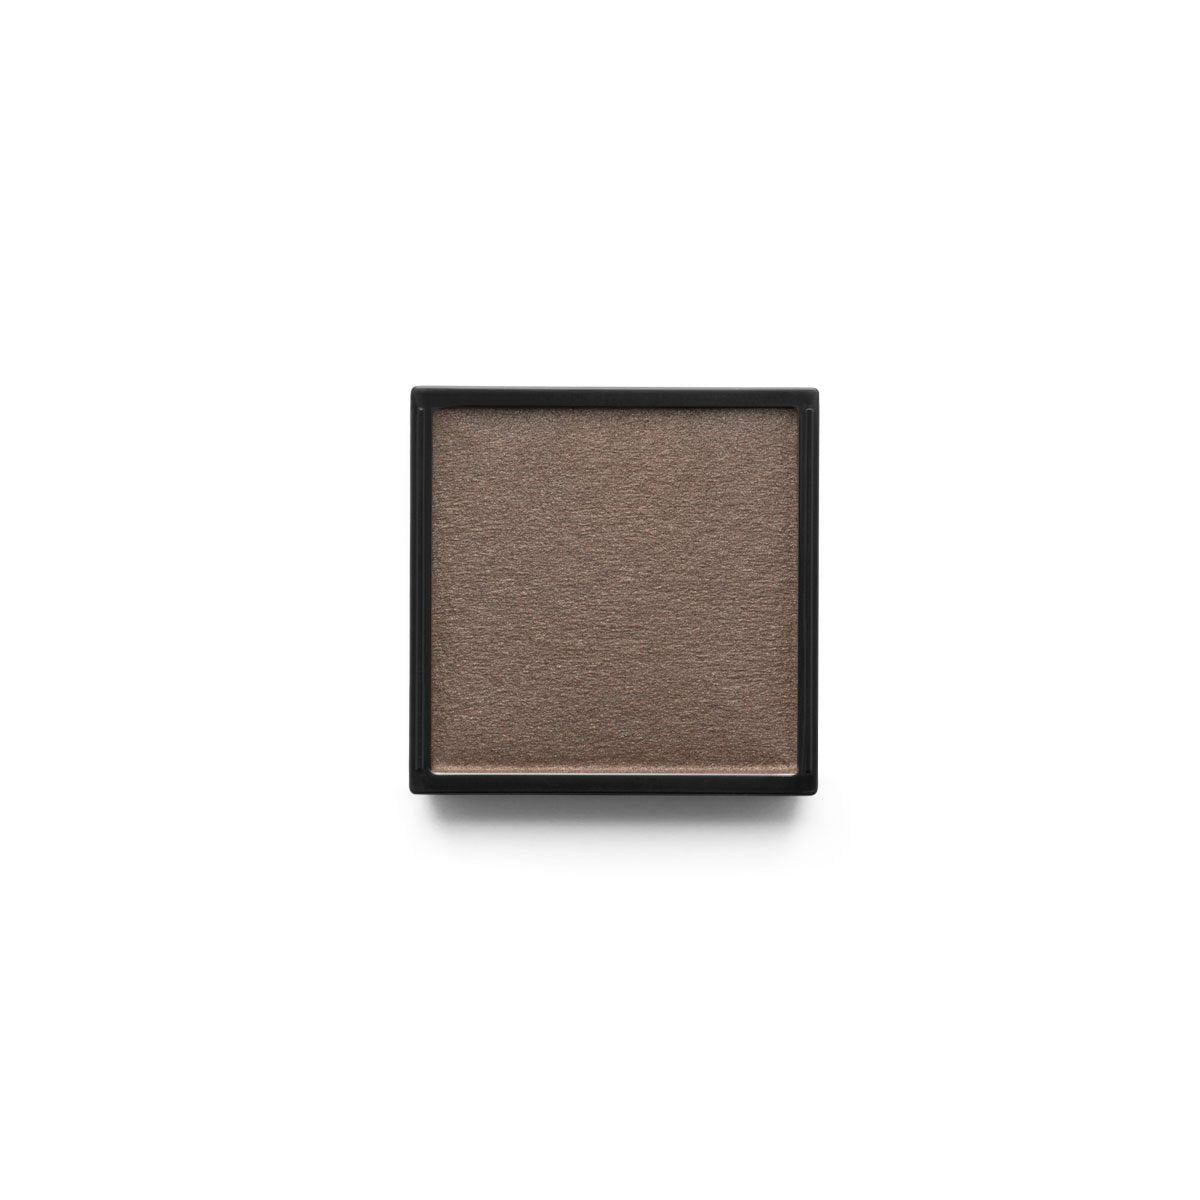 BRUN NOIR - MATTE BROWN BLACK - matte finish eyeshadow in brown black shade 